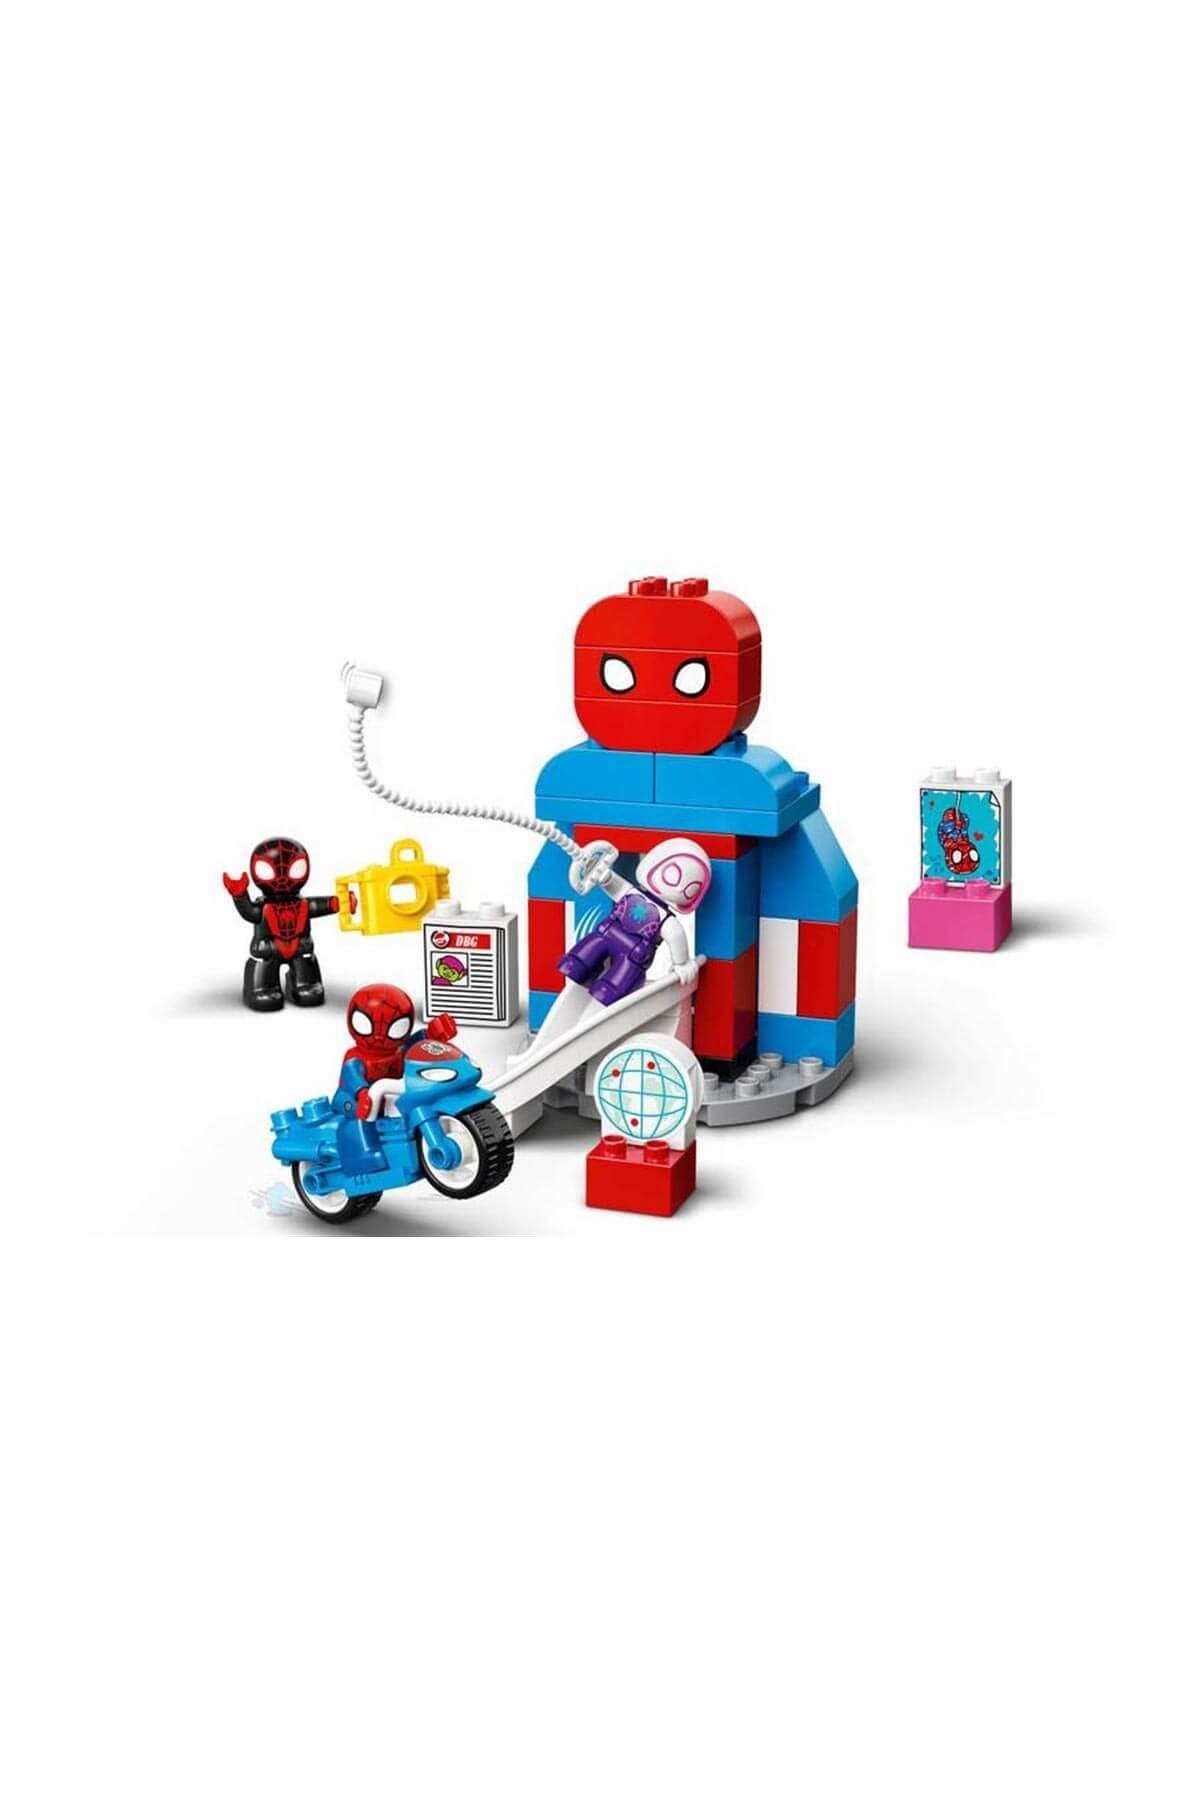 Lego Duplo Spider-Man Headquarters